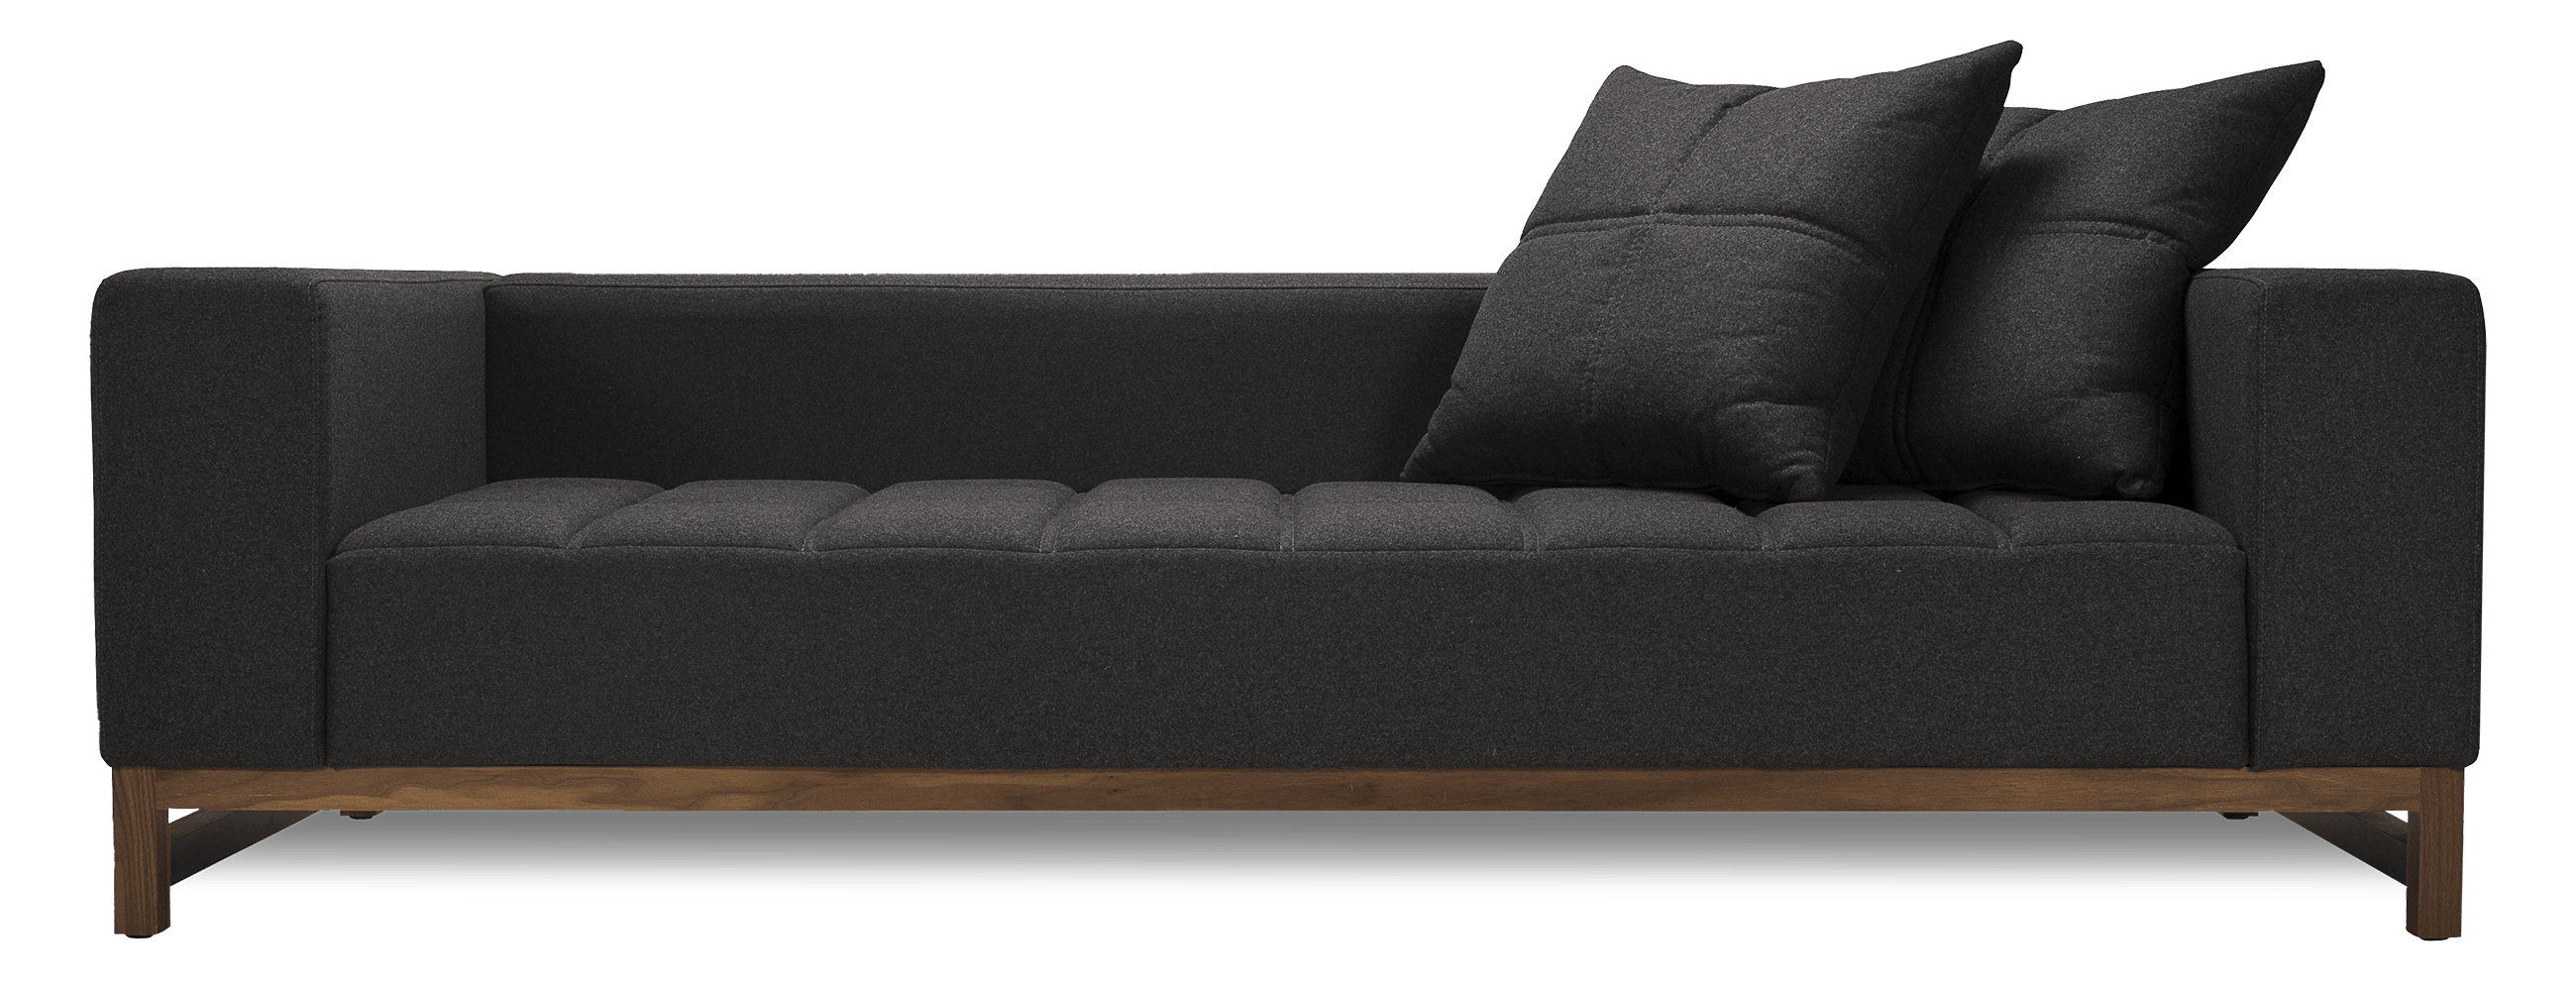 Interversion sofa